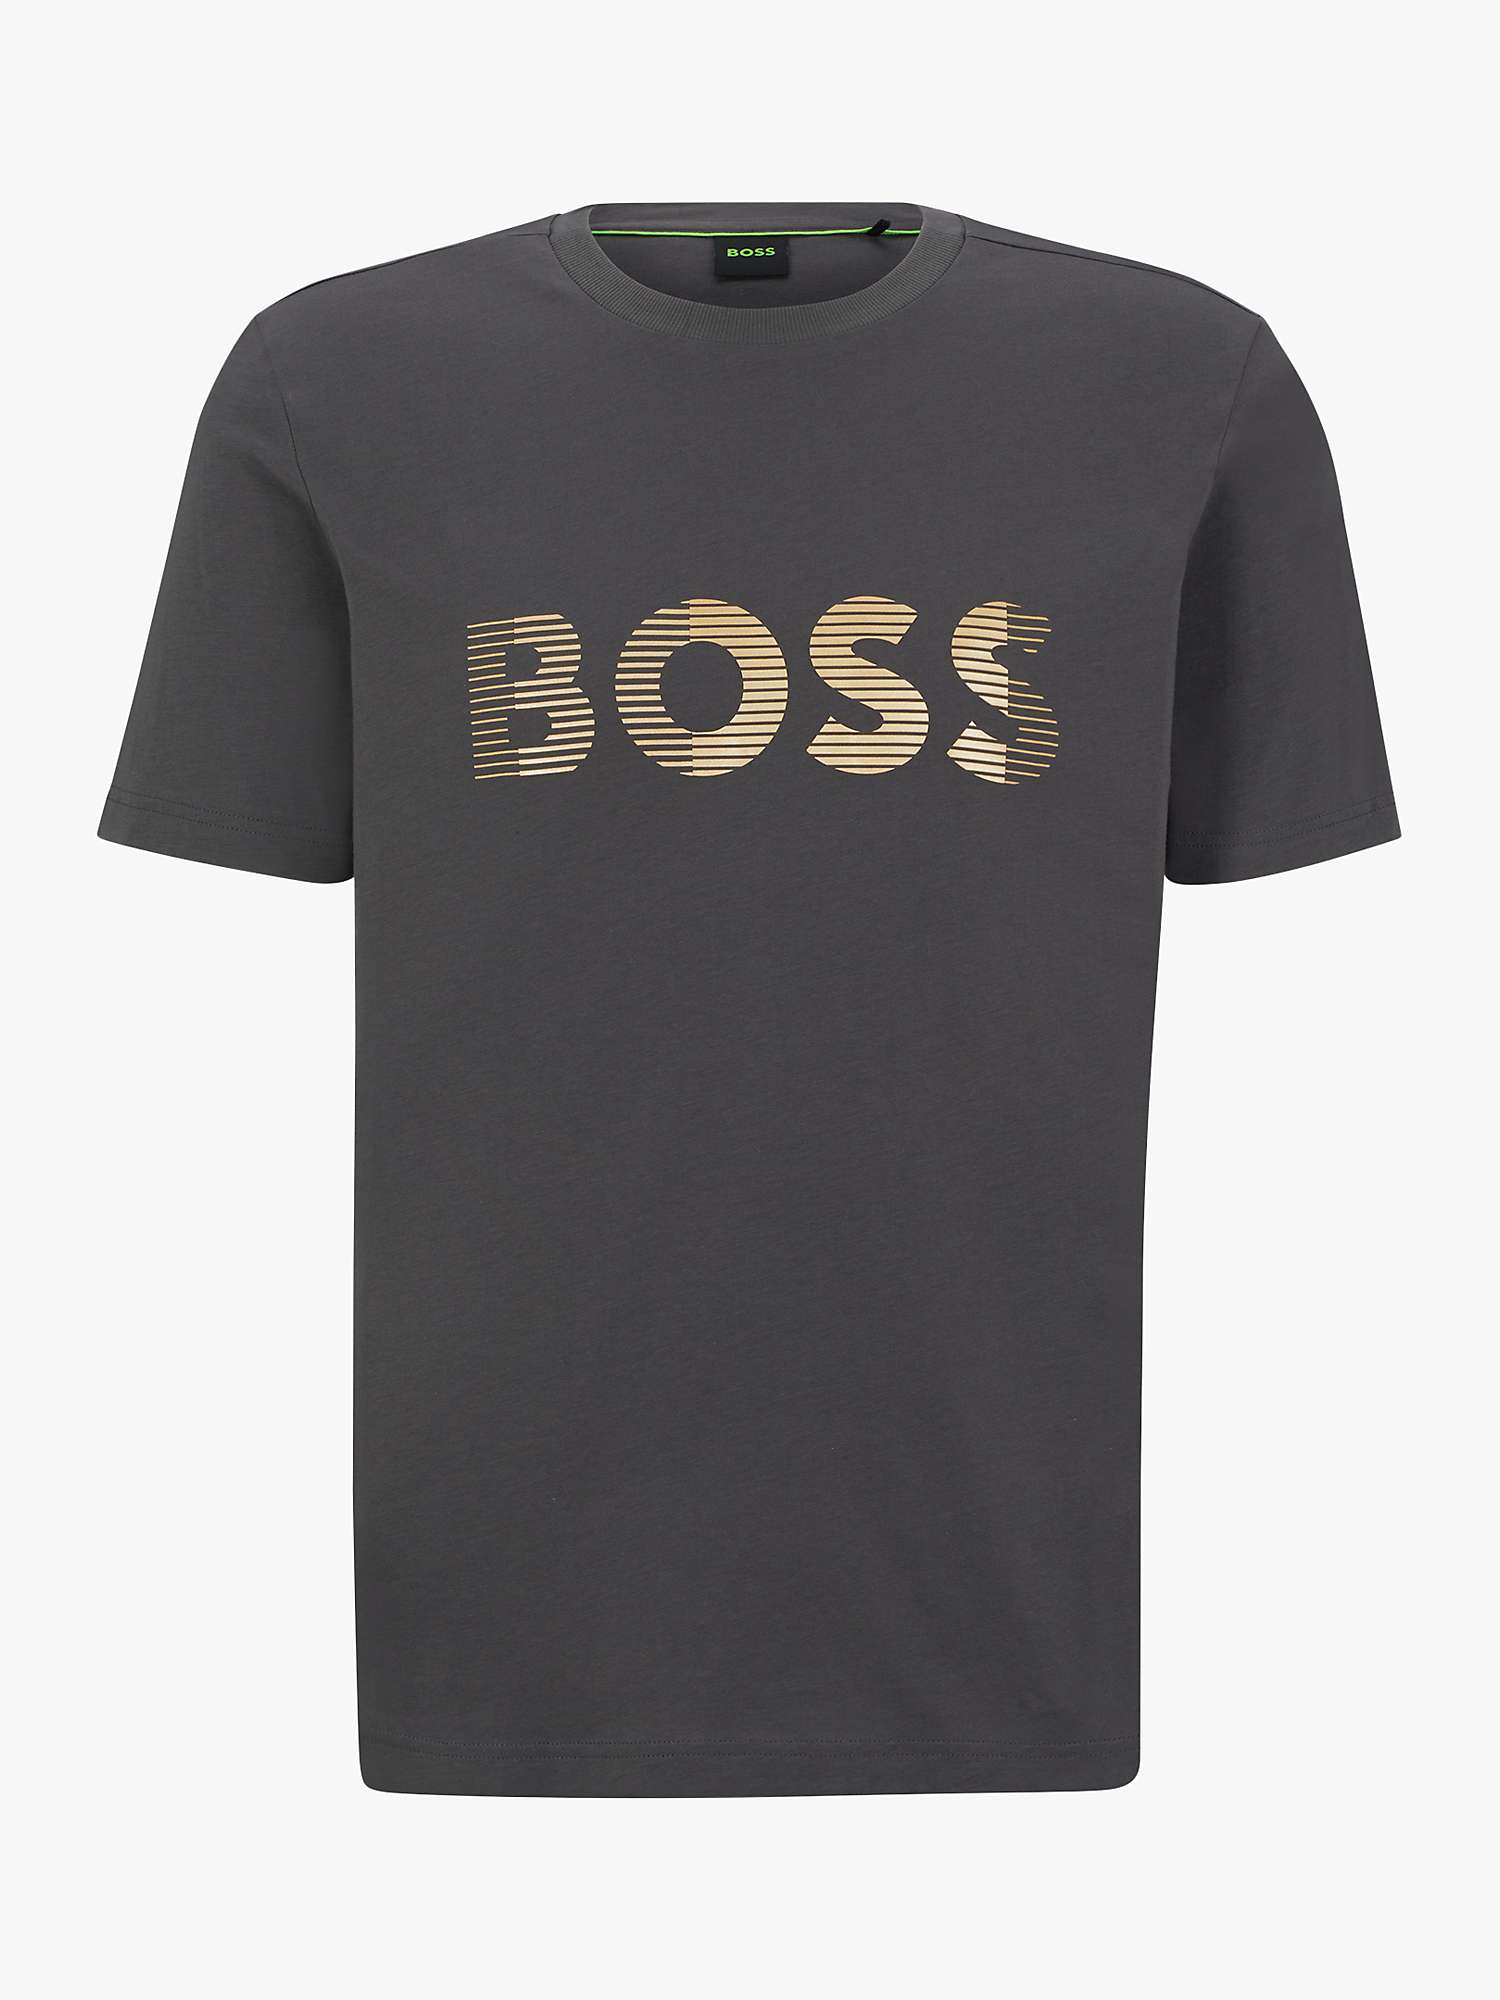 BOSS Tee 027 Logo Print T-Shirt, Dark Grey at John Lewis & Partners